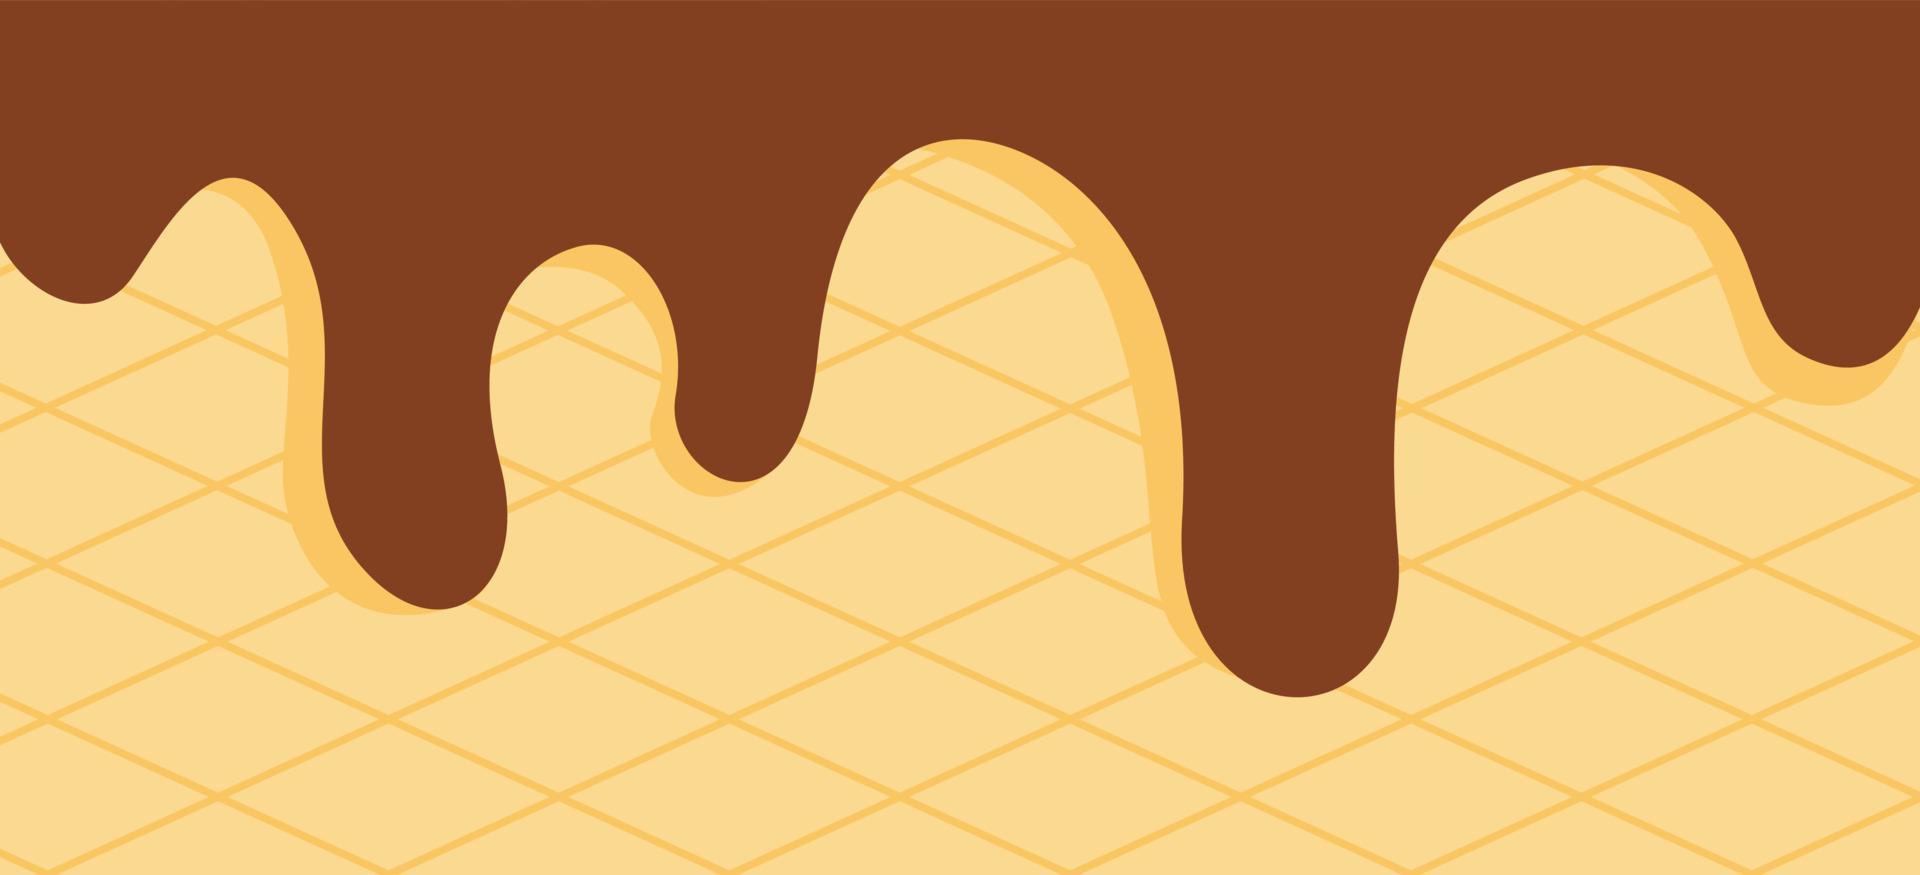 Vektor-Illustration-Hintergrund mit geschmolzener Schokolade vektor